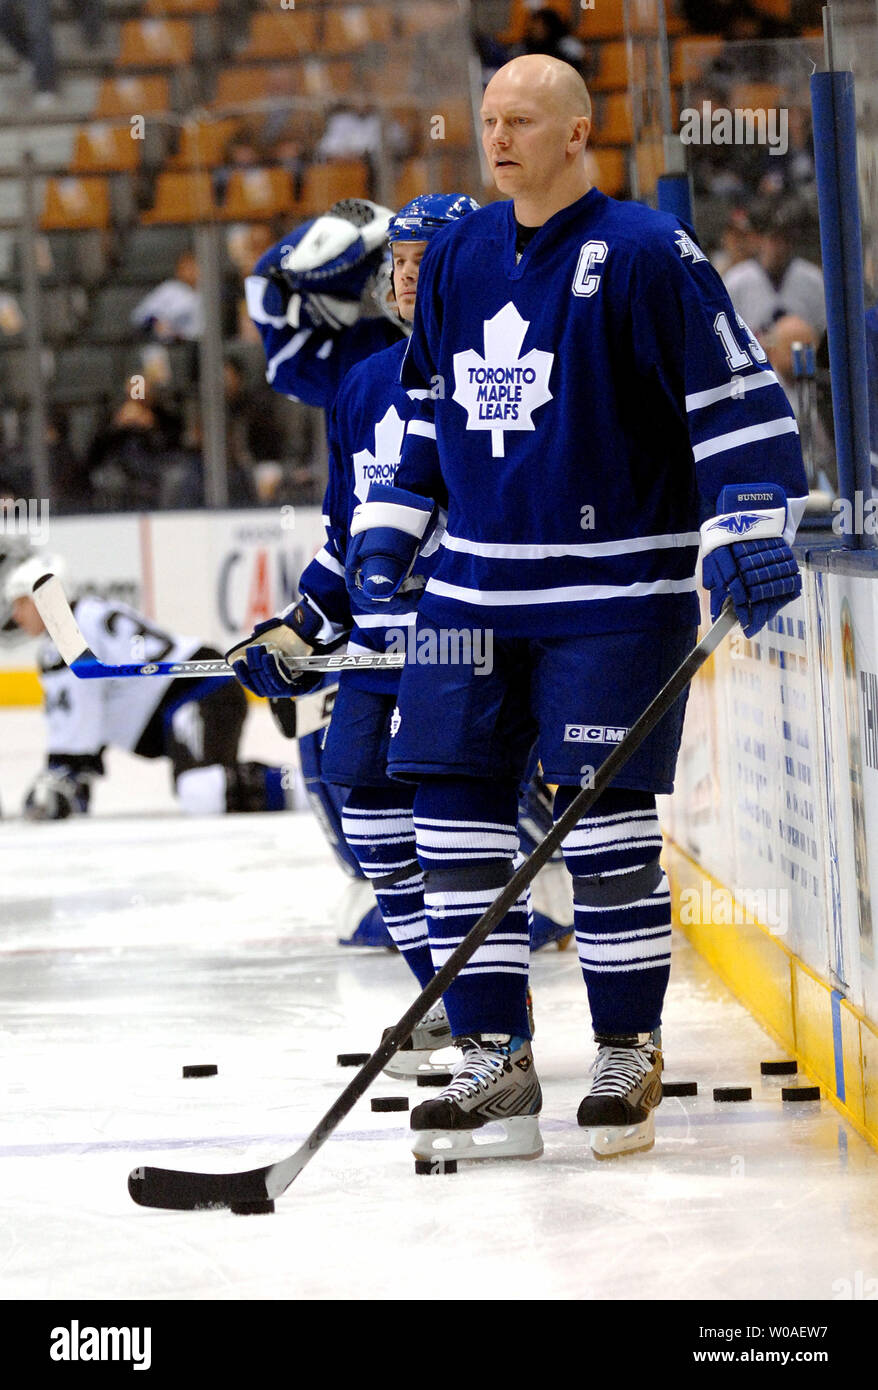 The Maple Leafs Quiet Captain - Hall of Famer Mats Sundin